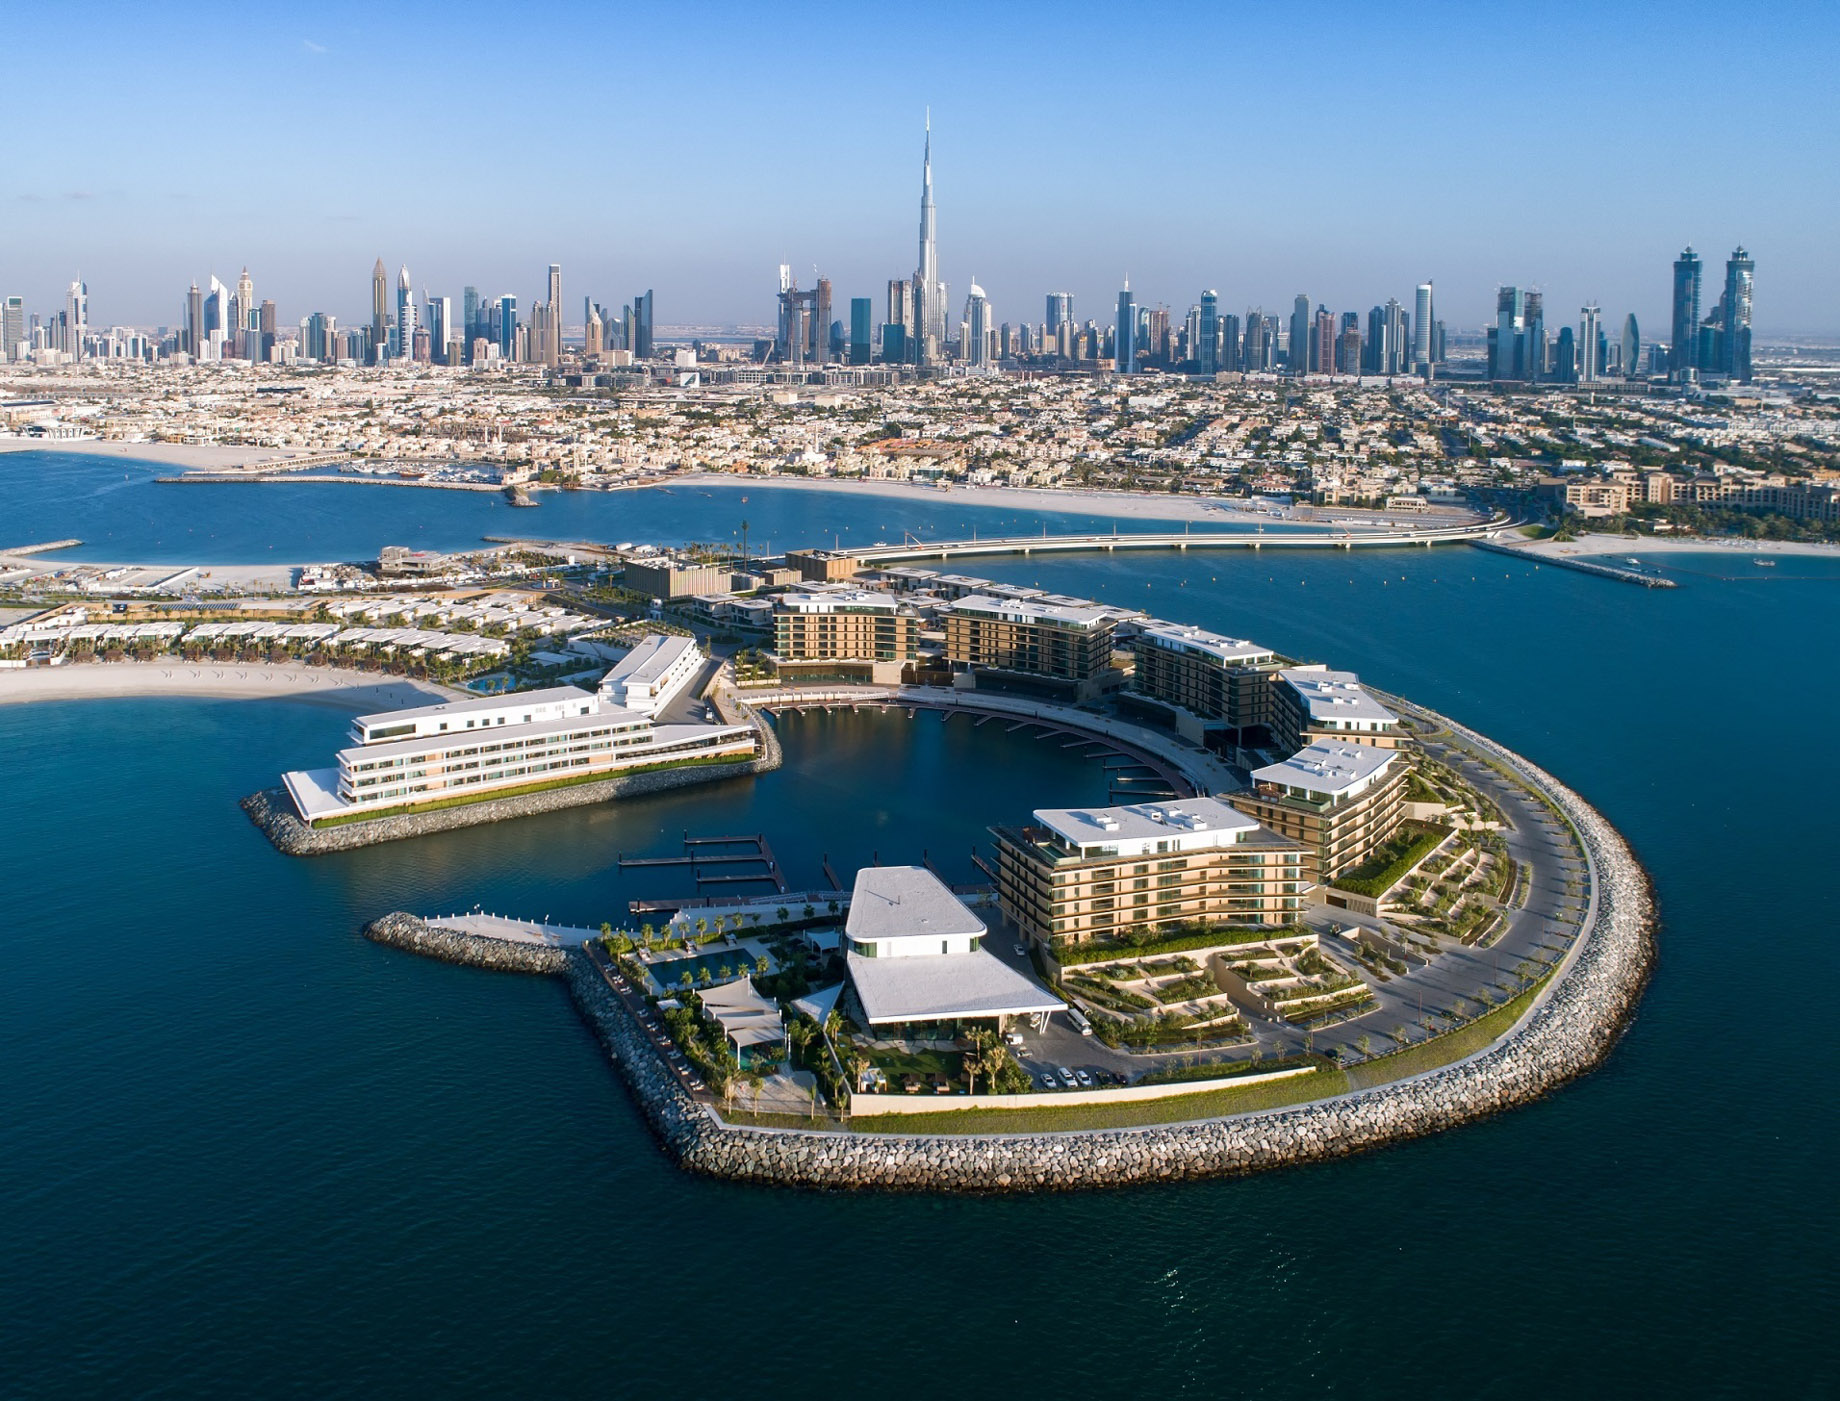 Bvlgari Resort Dubai - Jumeira Bay Island, Dubai, UAE - Resort Aerial View